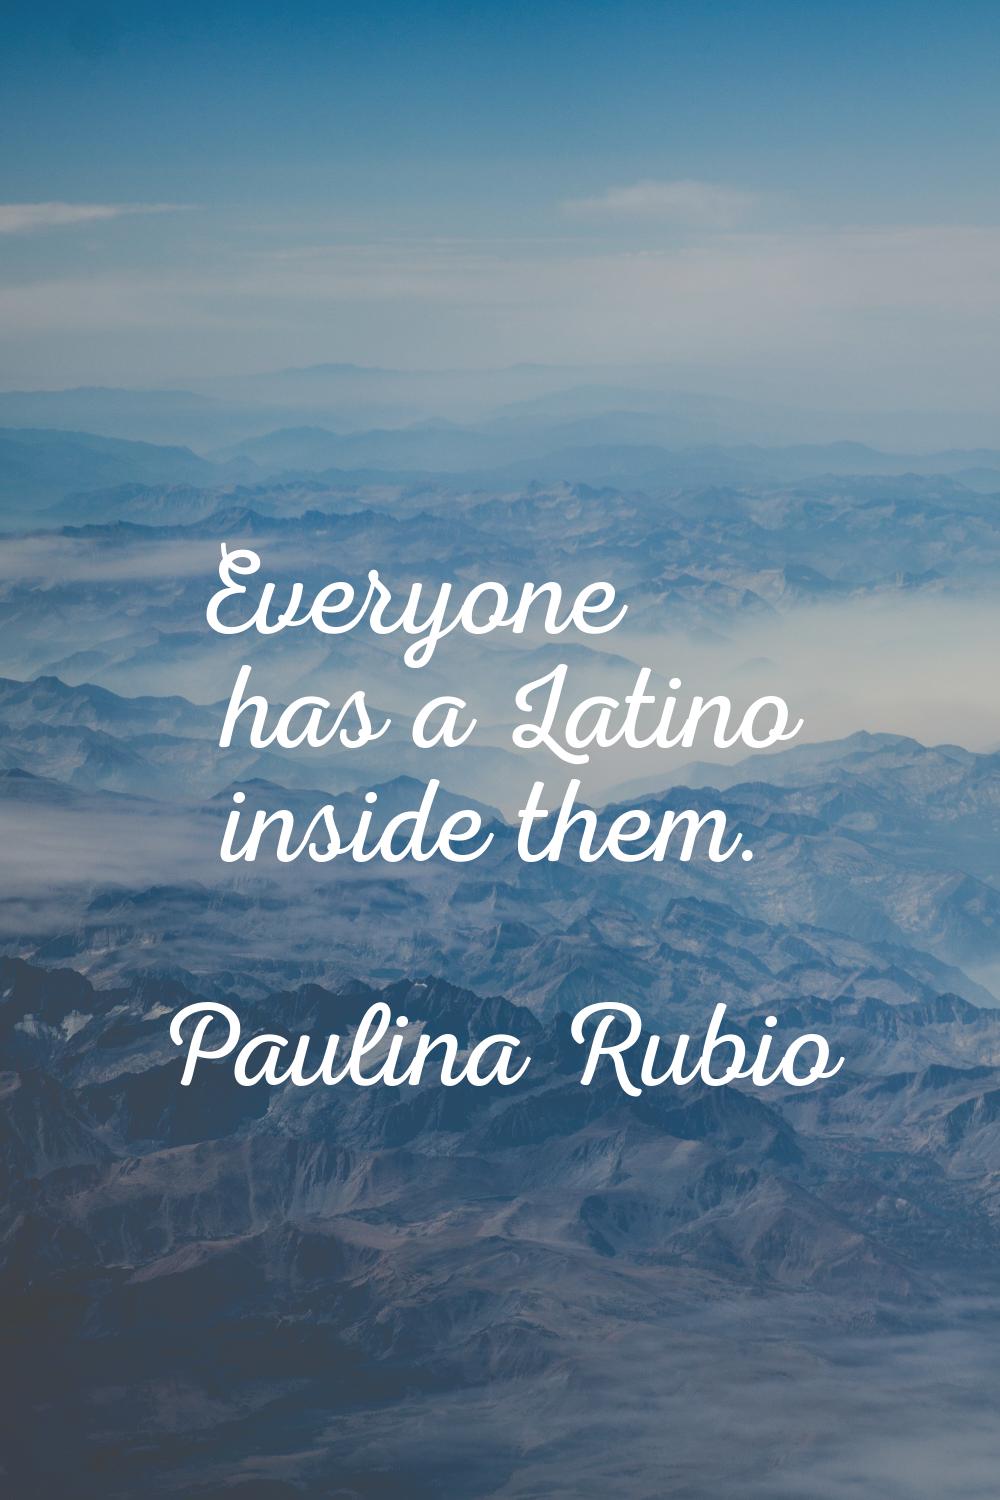 Everyone has a Latino inside them.